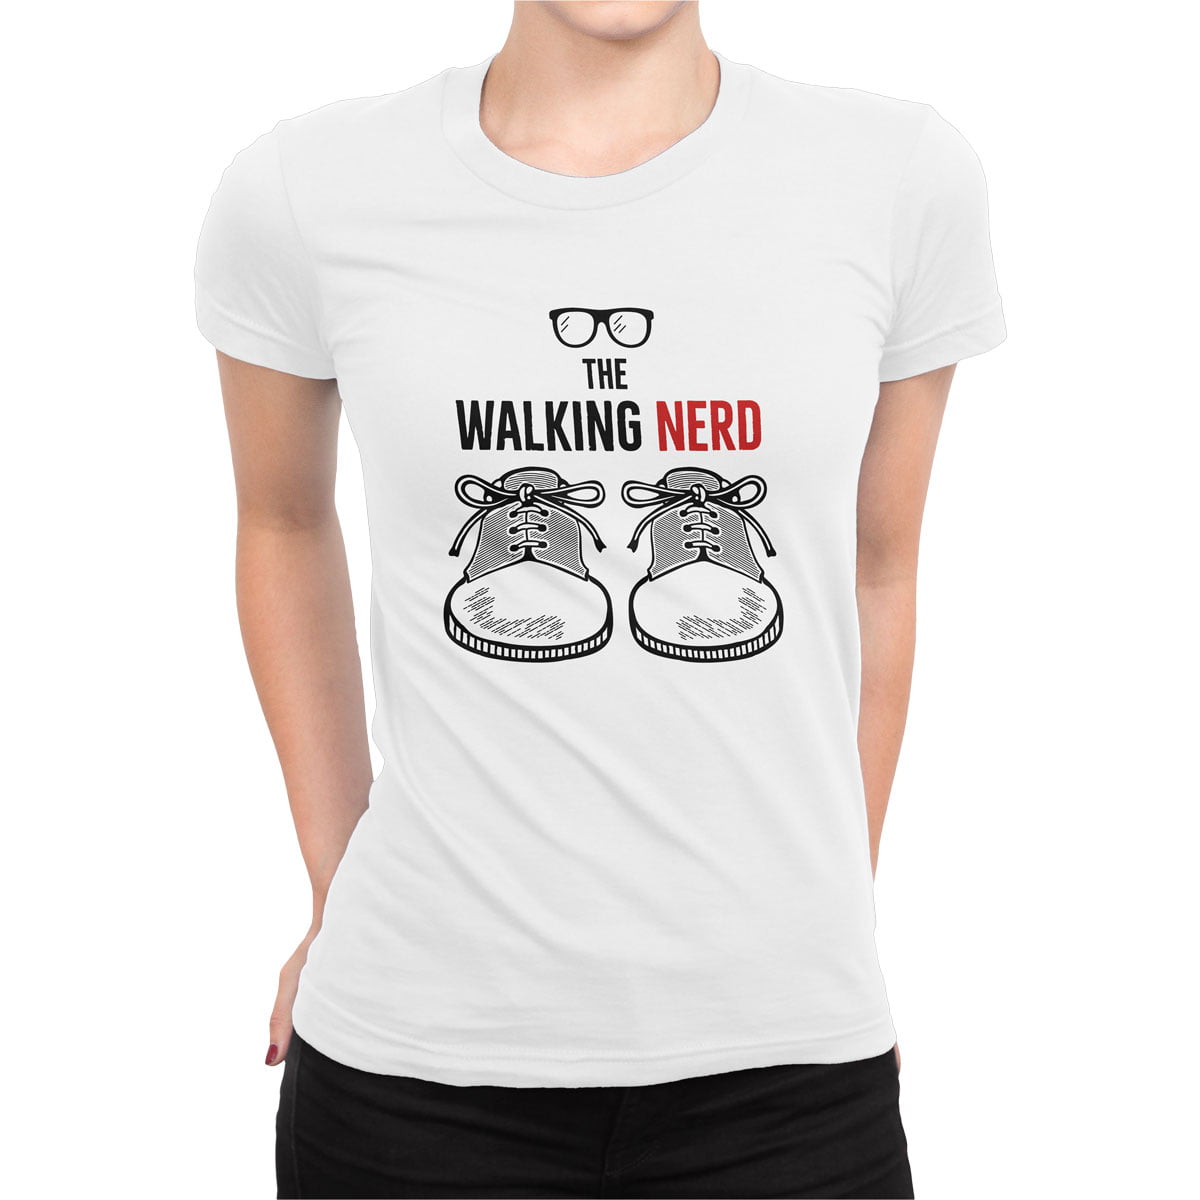 The walking nerd kadin tisort b - the walking nerd kadın t-shirt - figurex